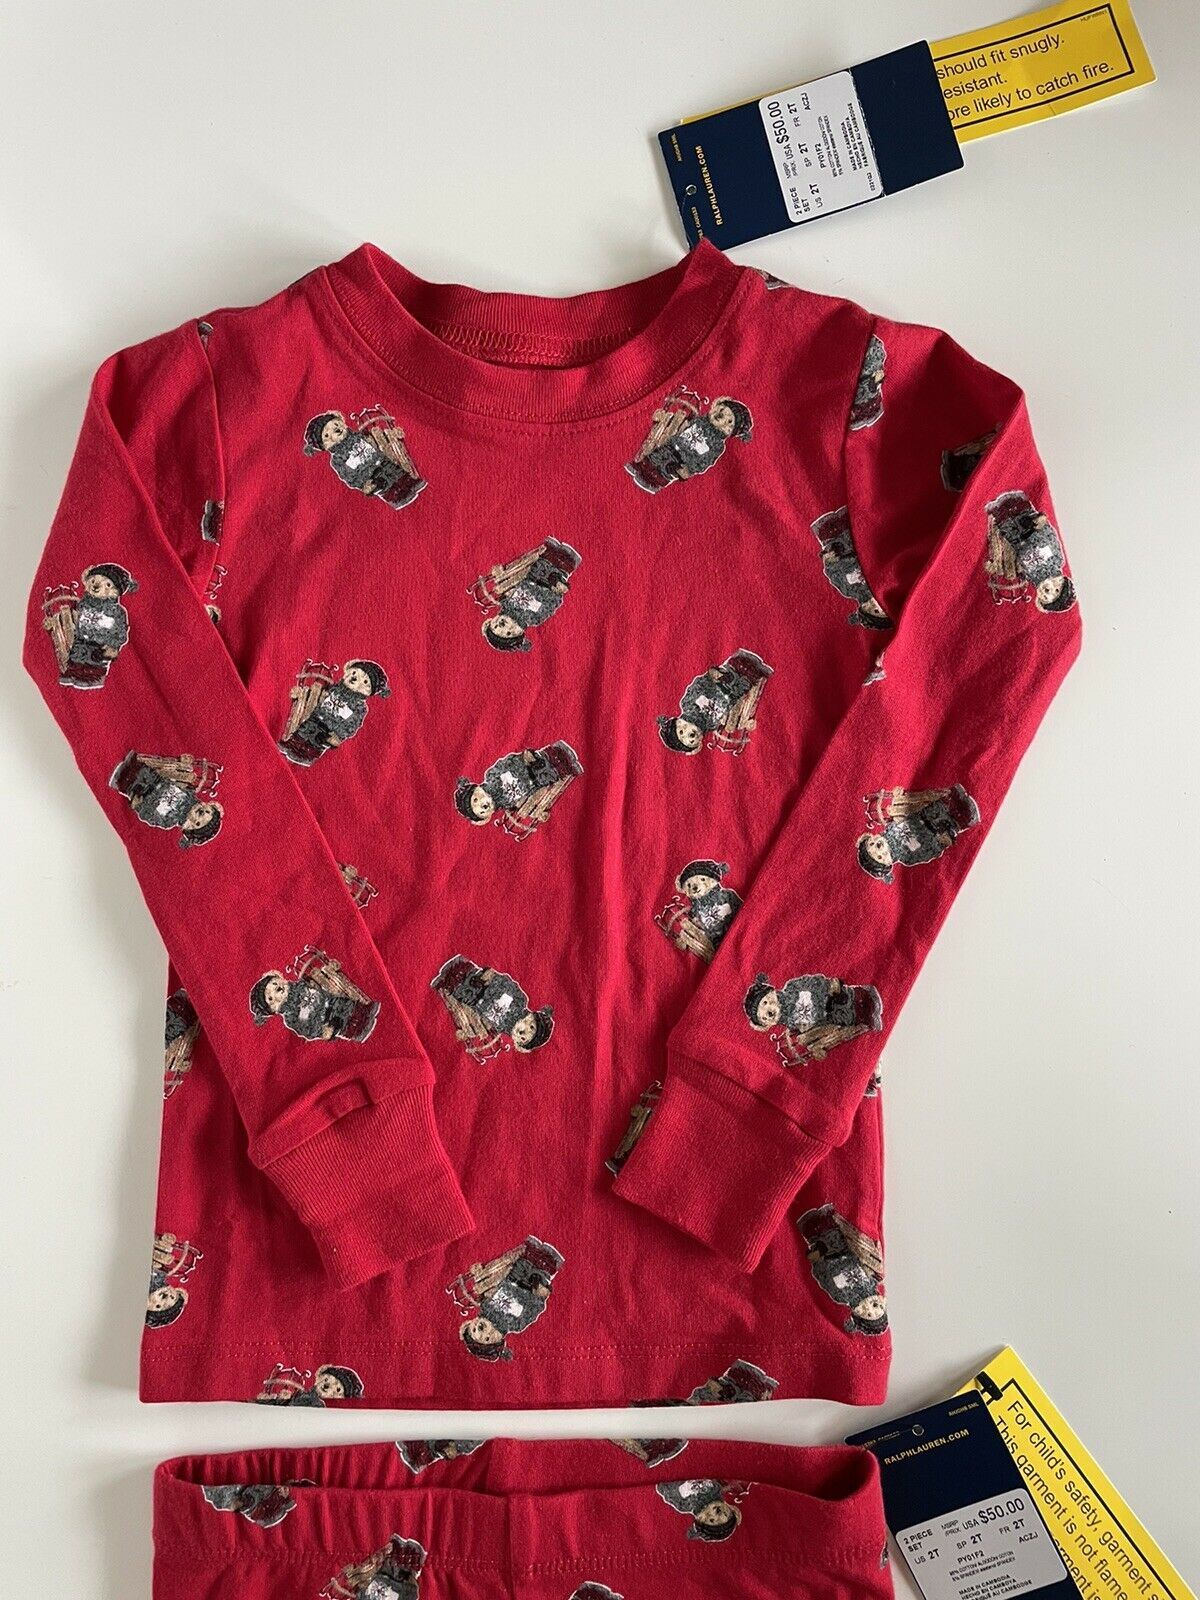 Neu mit Etikett: 50 $ Polo Ralph Lauren Bear Jungen-Pyjama-Set in Rot, 7 US